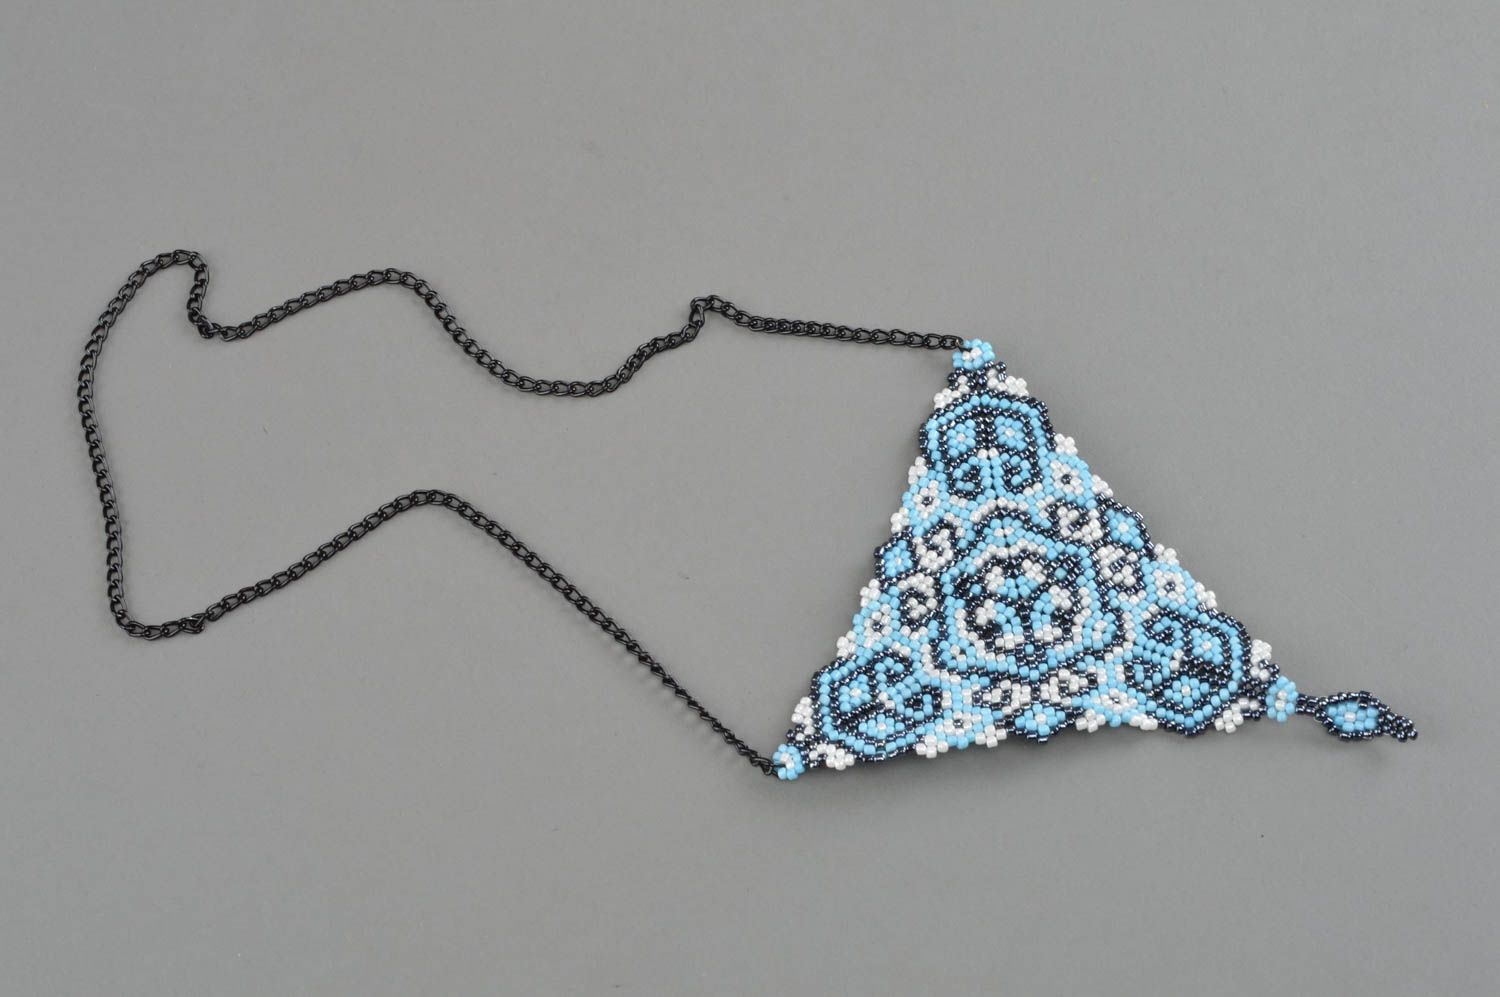 Handmade beaded pendant accessory with chain designer jewelry for women photo 2